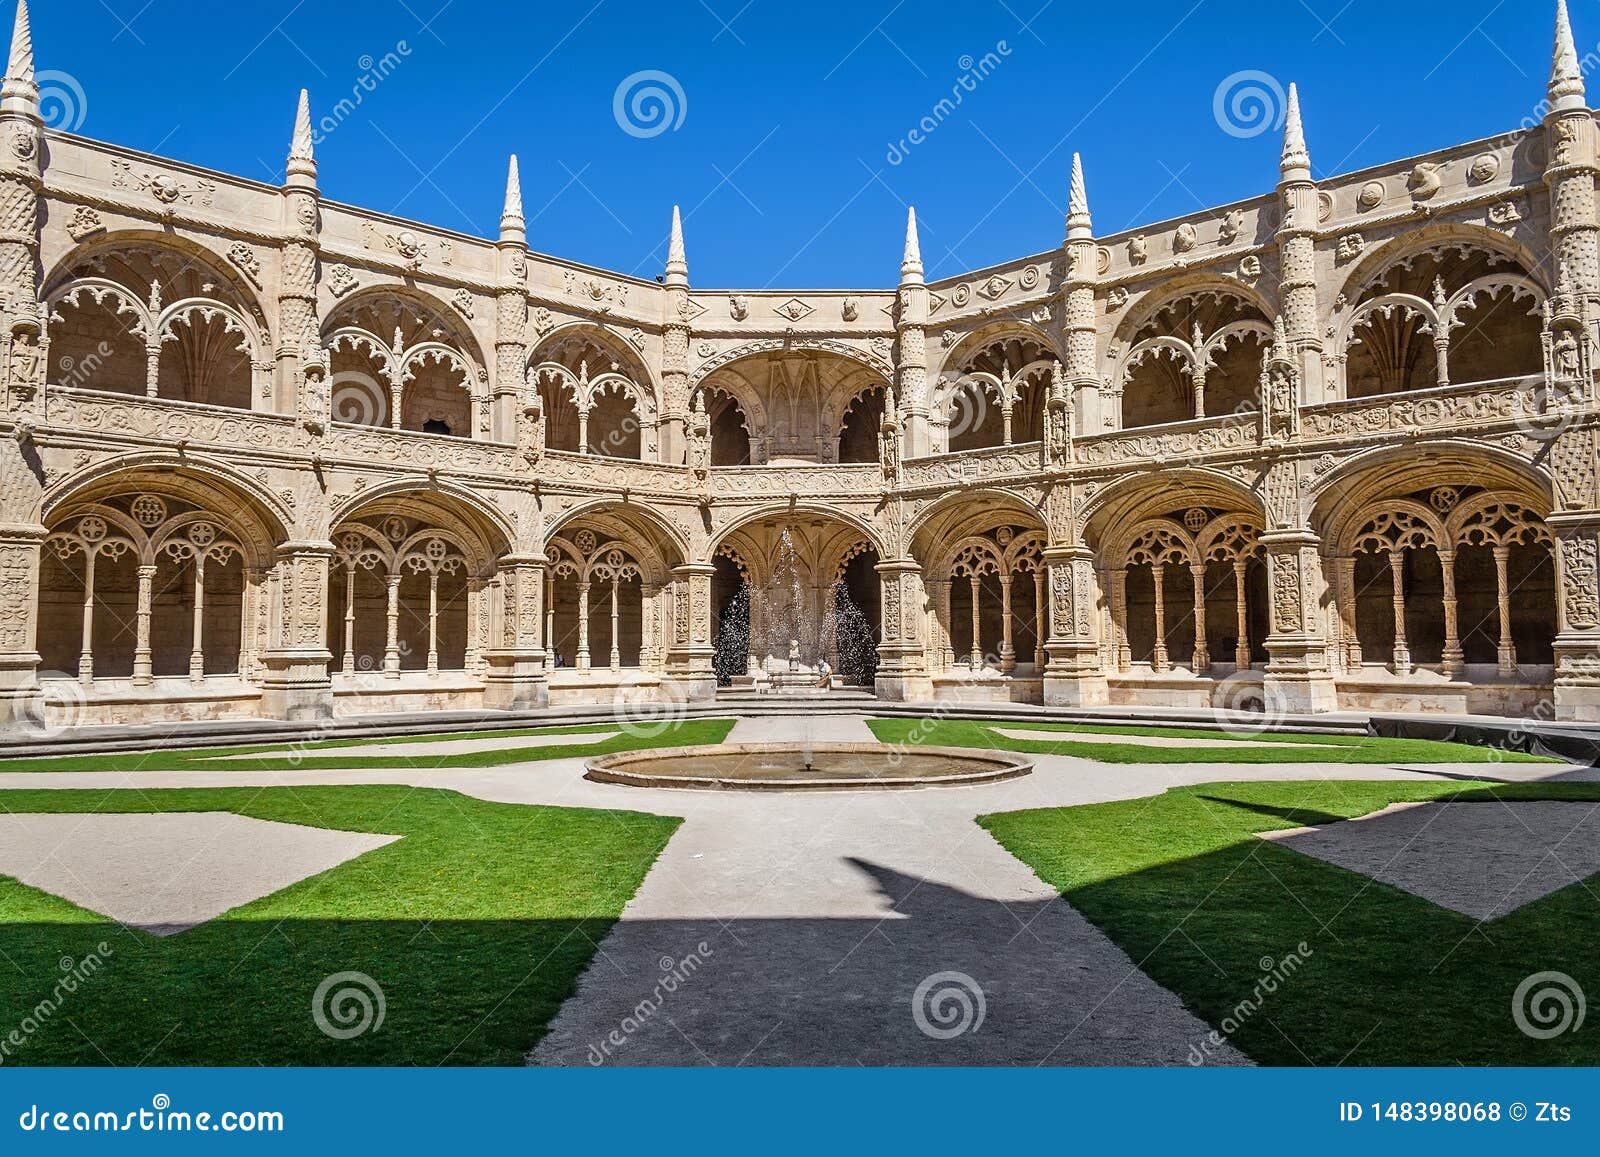 lisbon, portugal. cloister of the jeronimos monastery or abbey aka santa maria de belem monastery